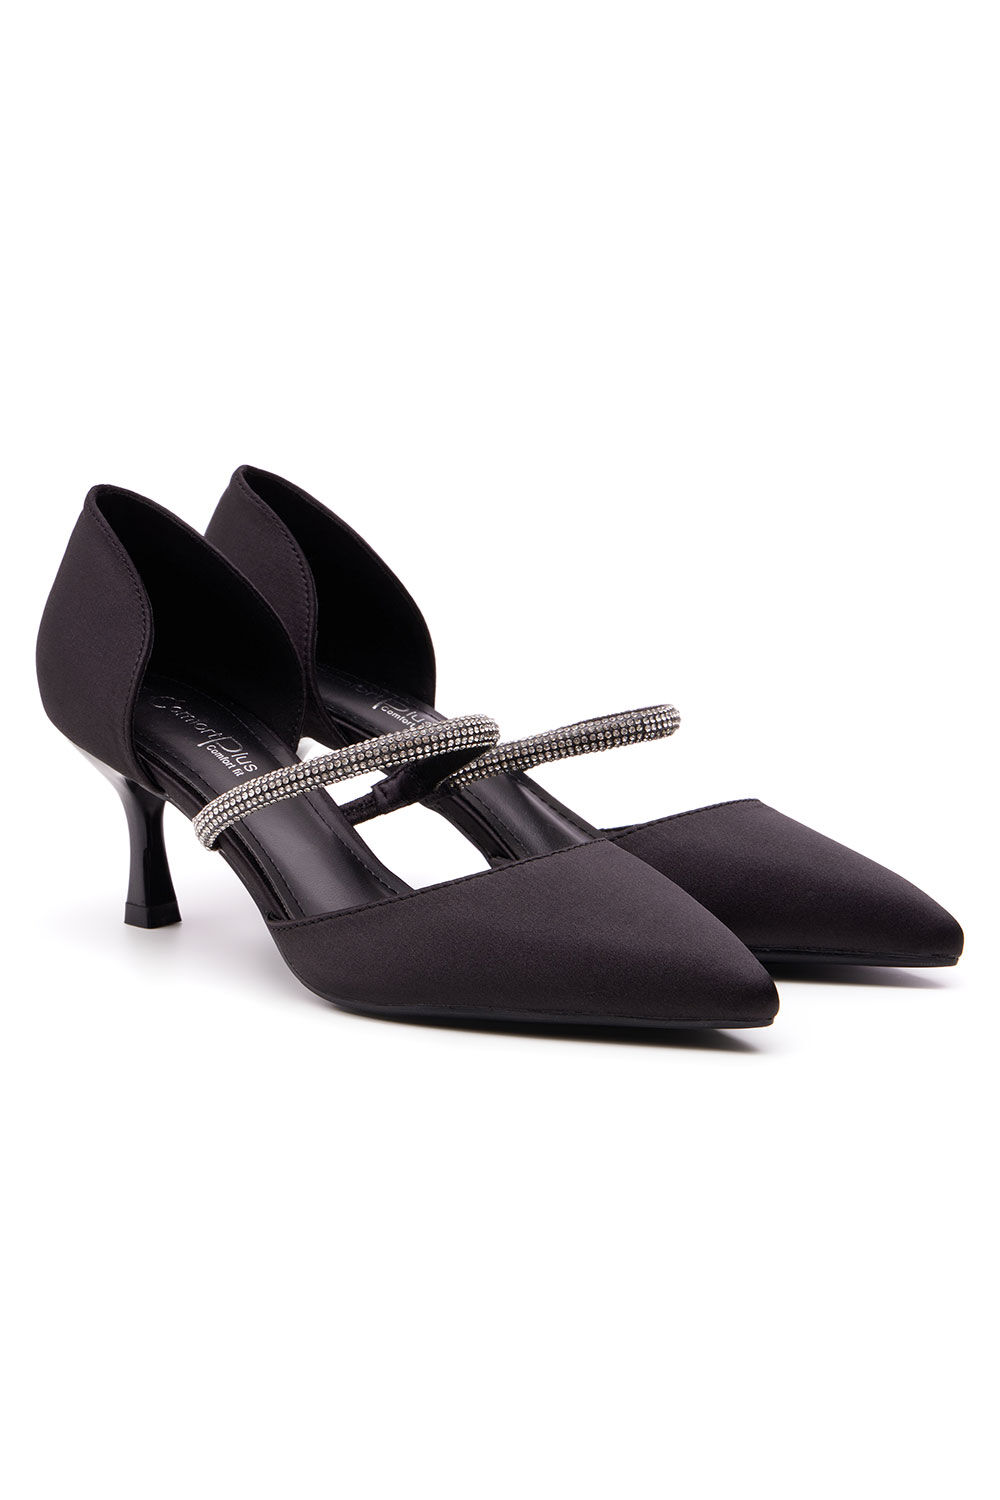 Bonmarche Women’s Black Diamante Detail Fabric Kitten Heels with Band, Size: 3